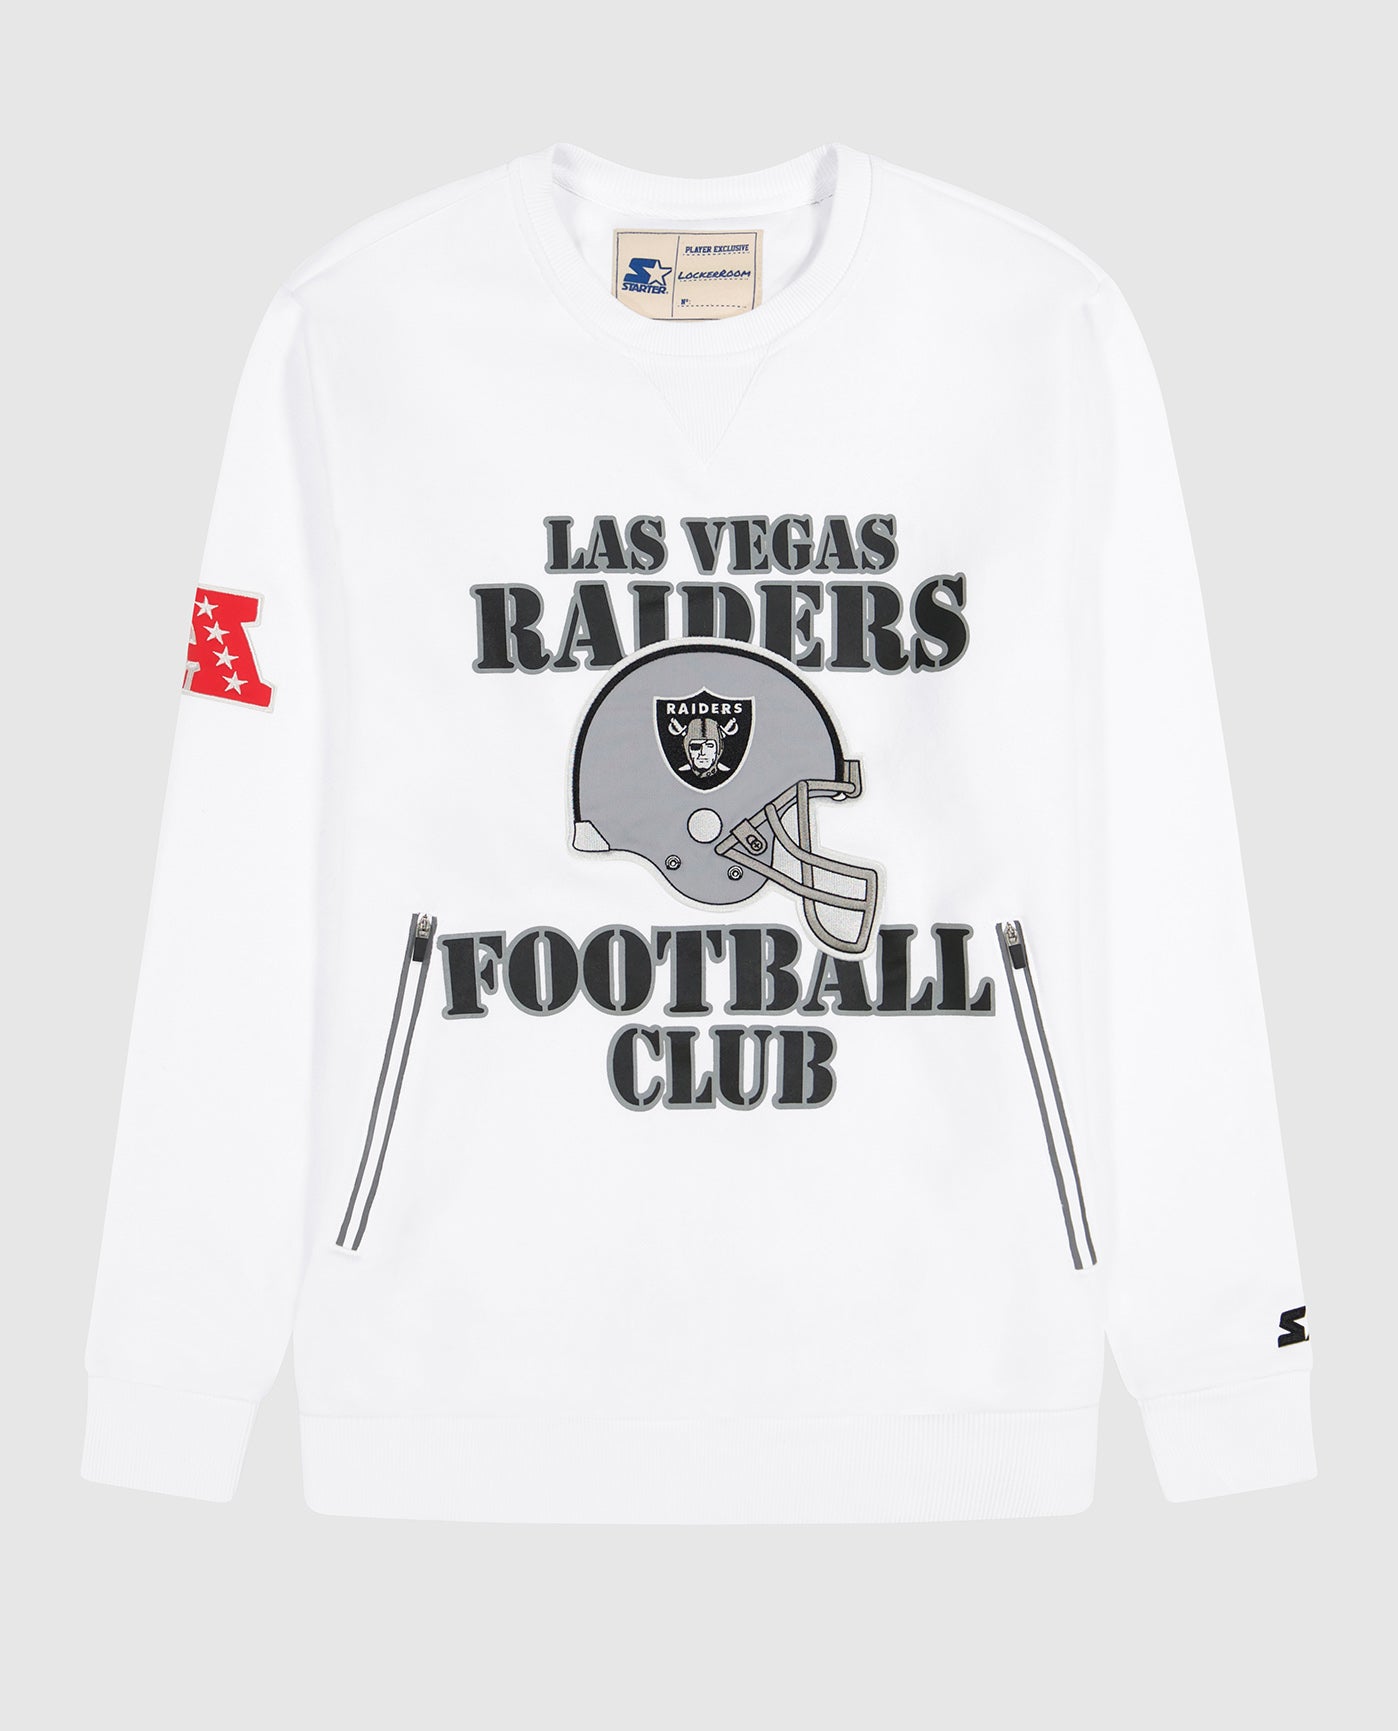 Starter Jersey Shirt Los Angeles Raiders Size M NFL Vintage 